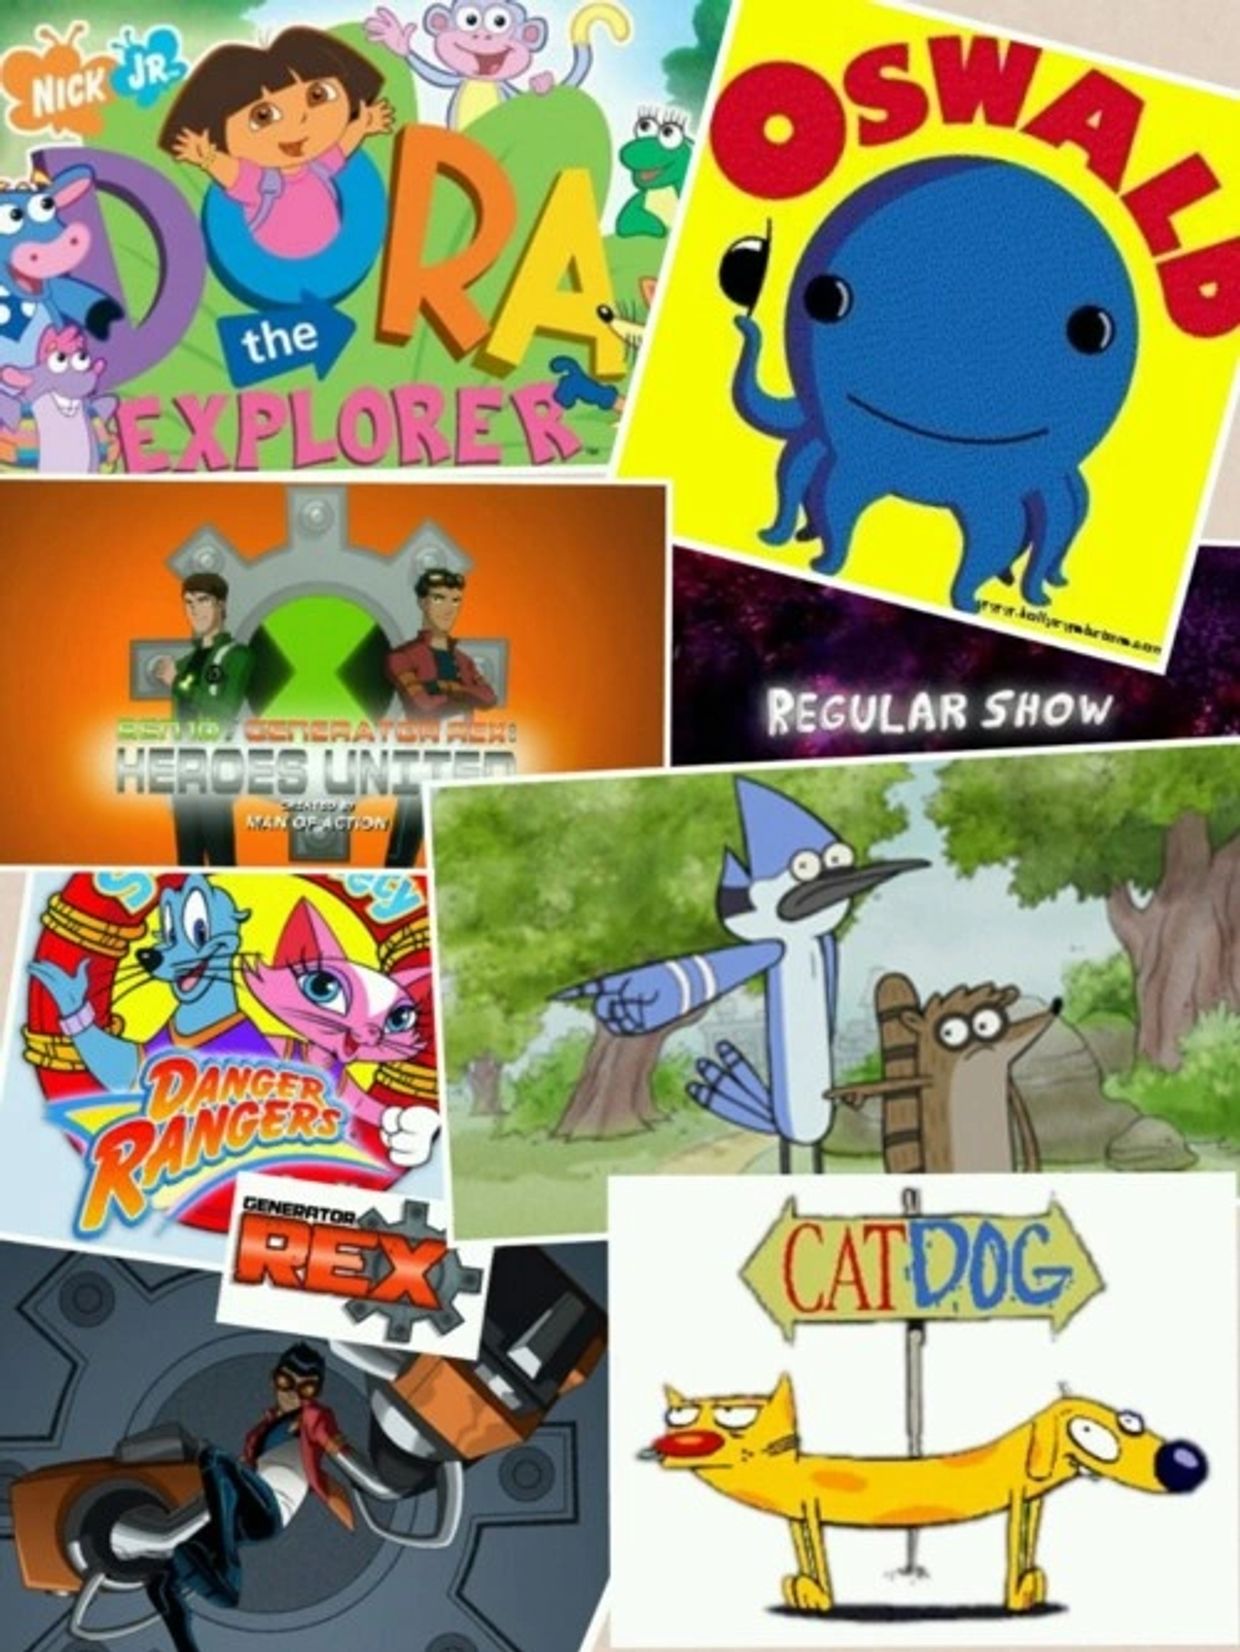 Dora the Explorer Oswald octopus
Catdog PBS Cartoon Network Nickelodeon 
Generator rex Regular show